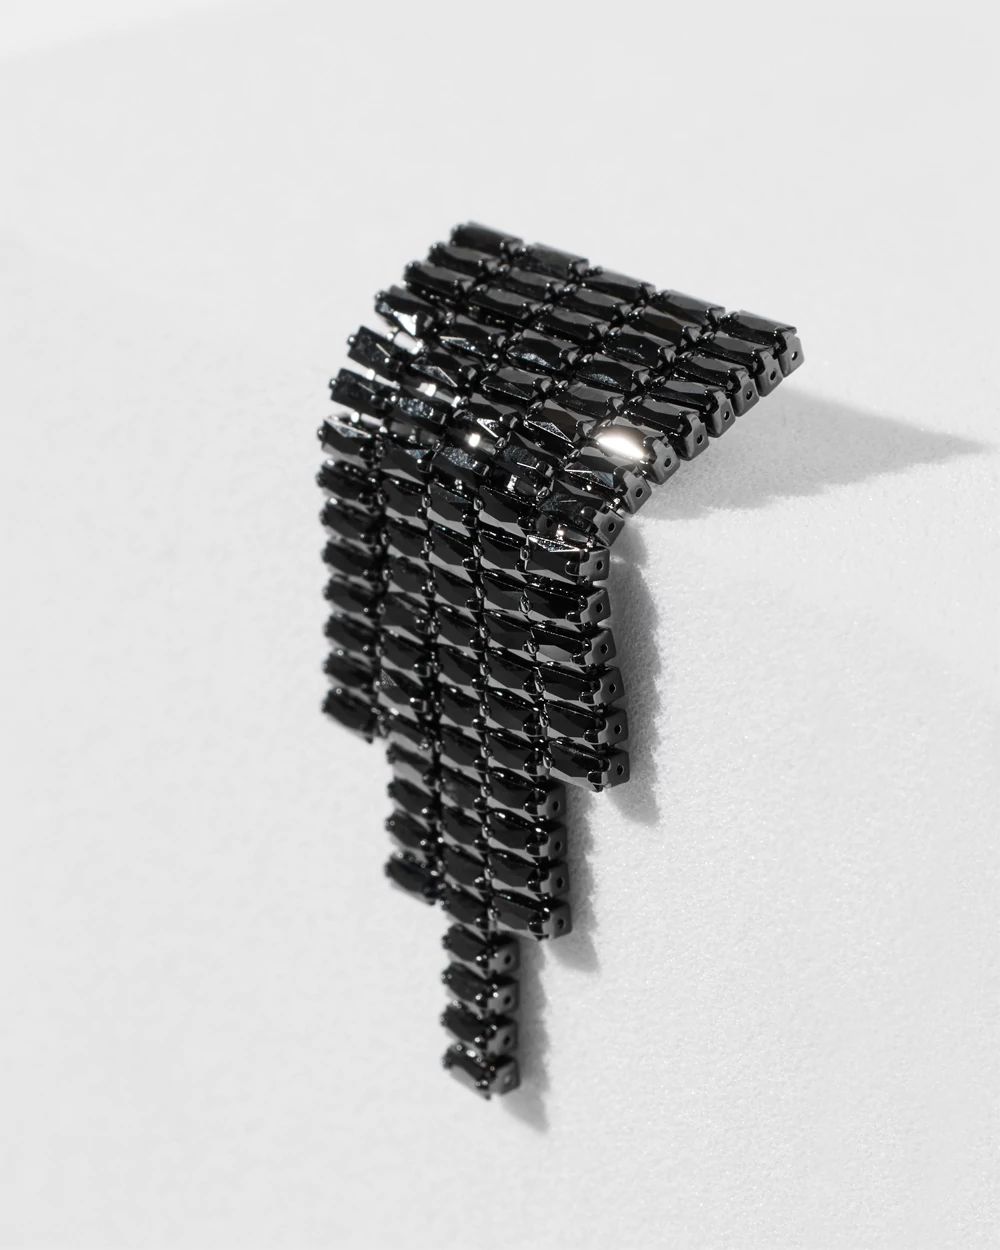 Hematite Jet Short Fringe Earrings click to view larger image.